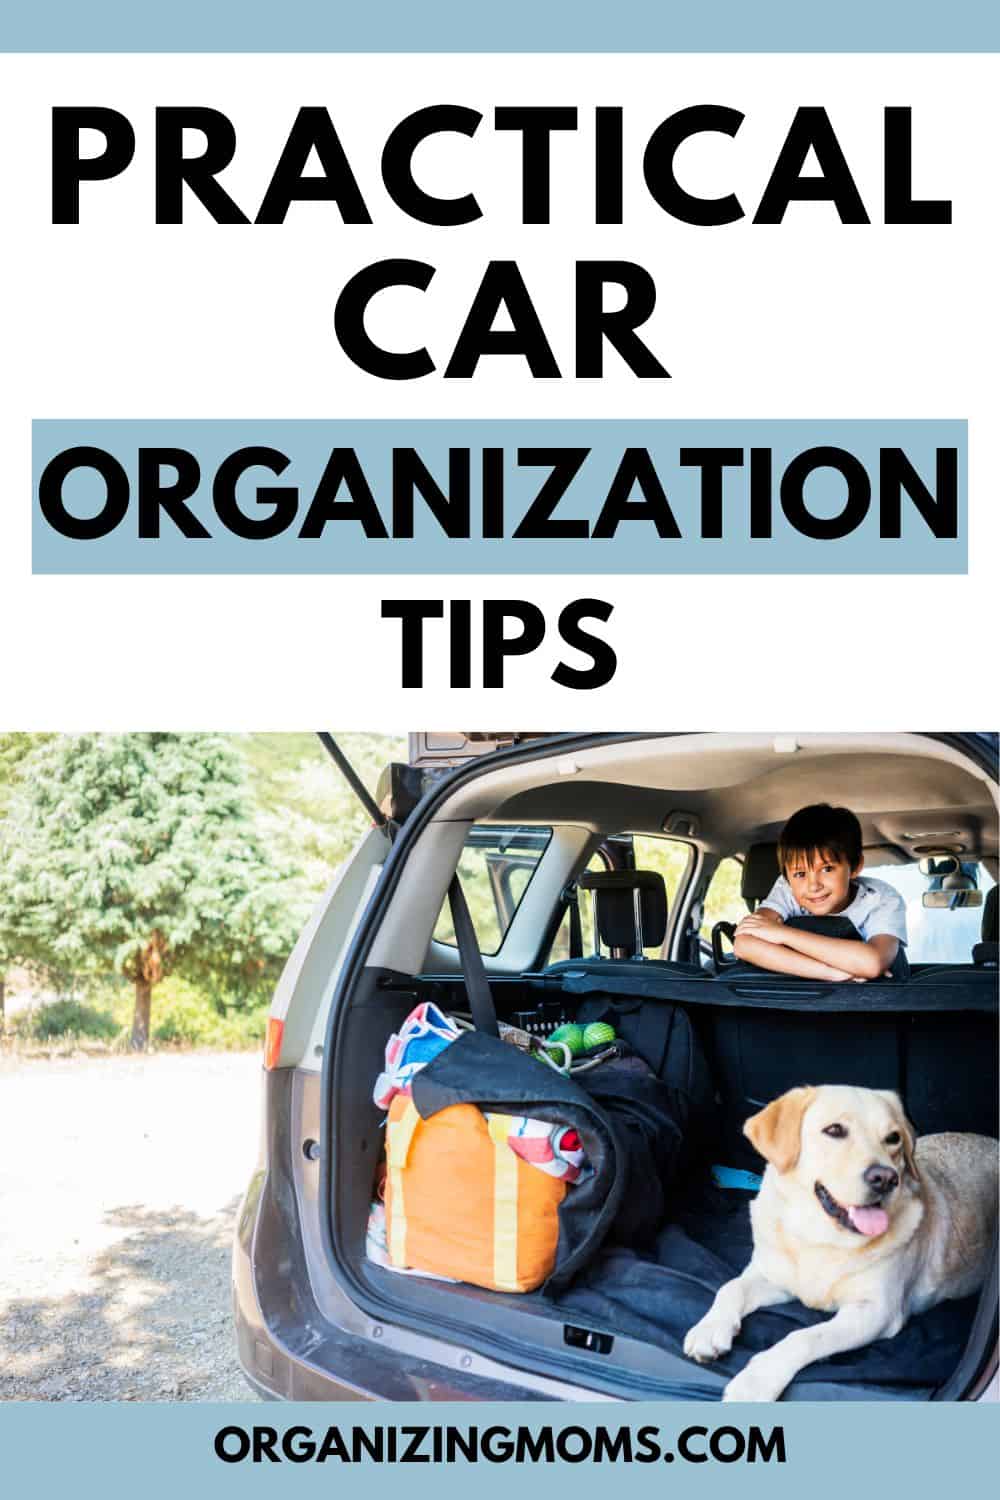 Image of organized car trunk. Text says Practical Car Organization Tips.